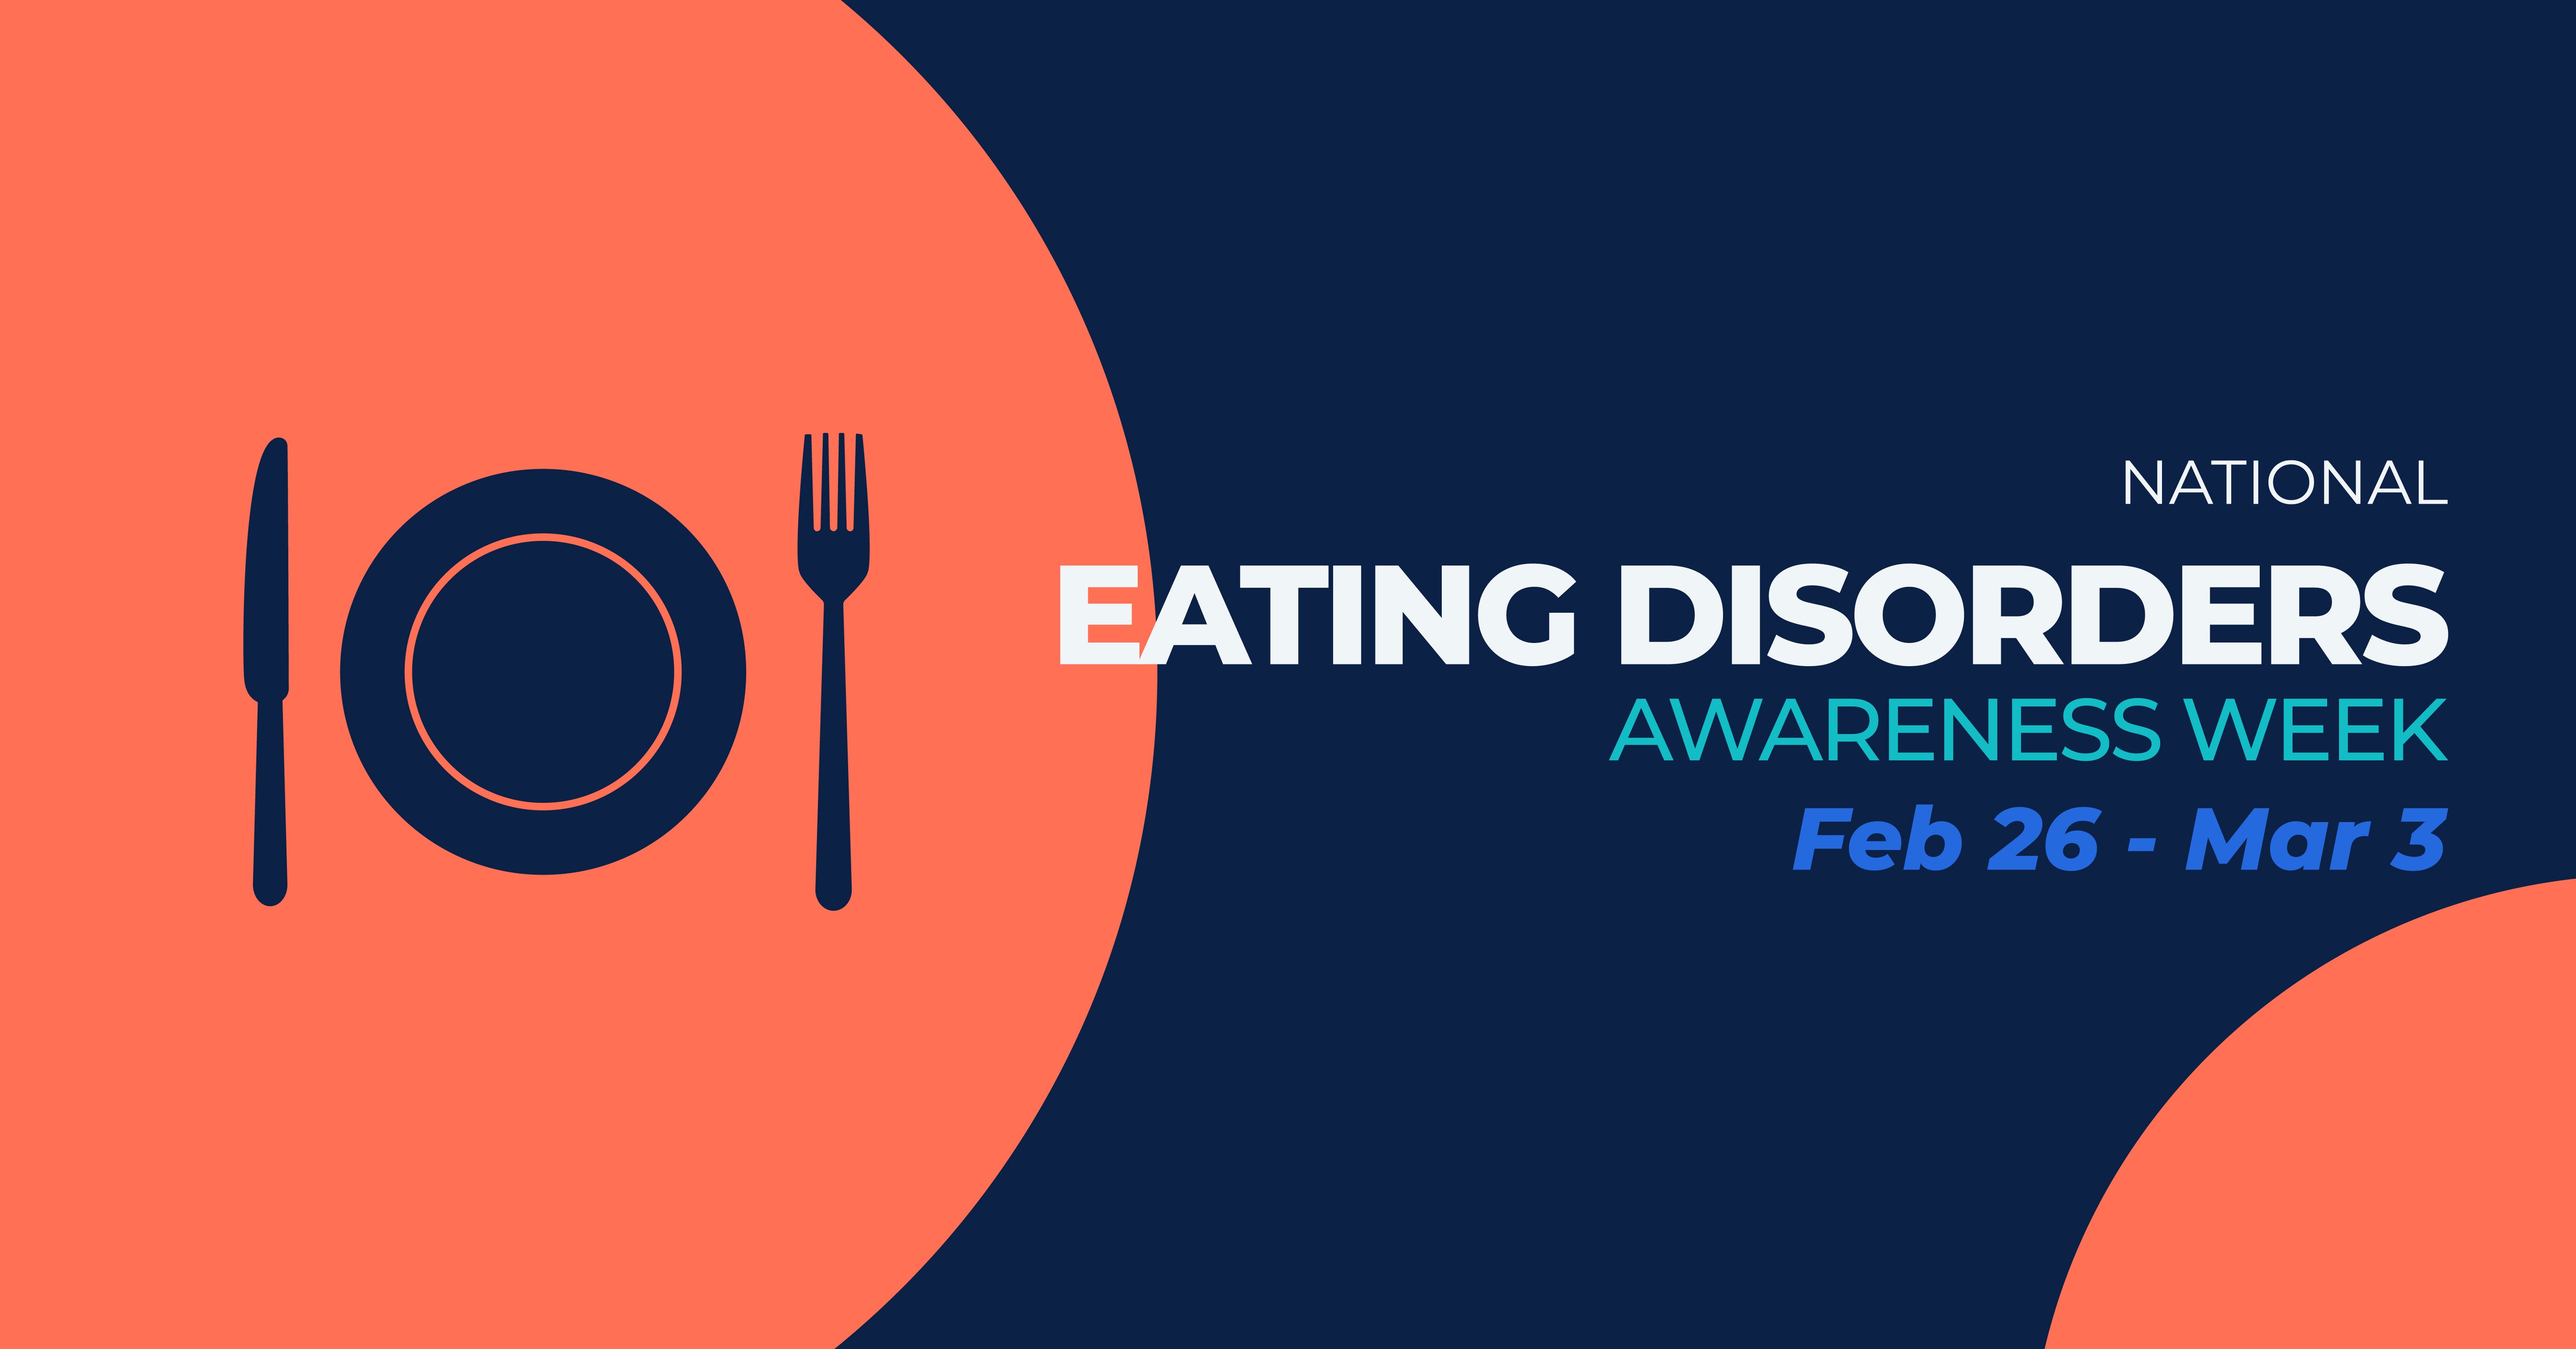 Breaking the Silence During National Eating Disorders Awareness Week